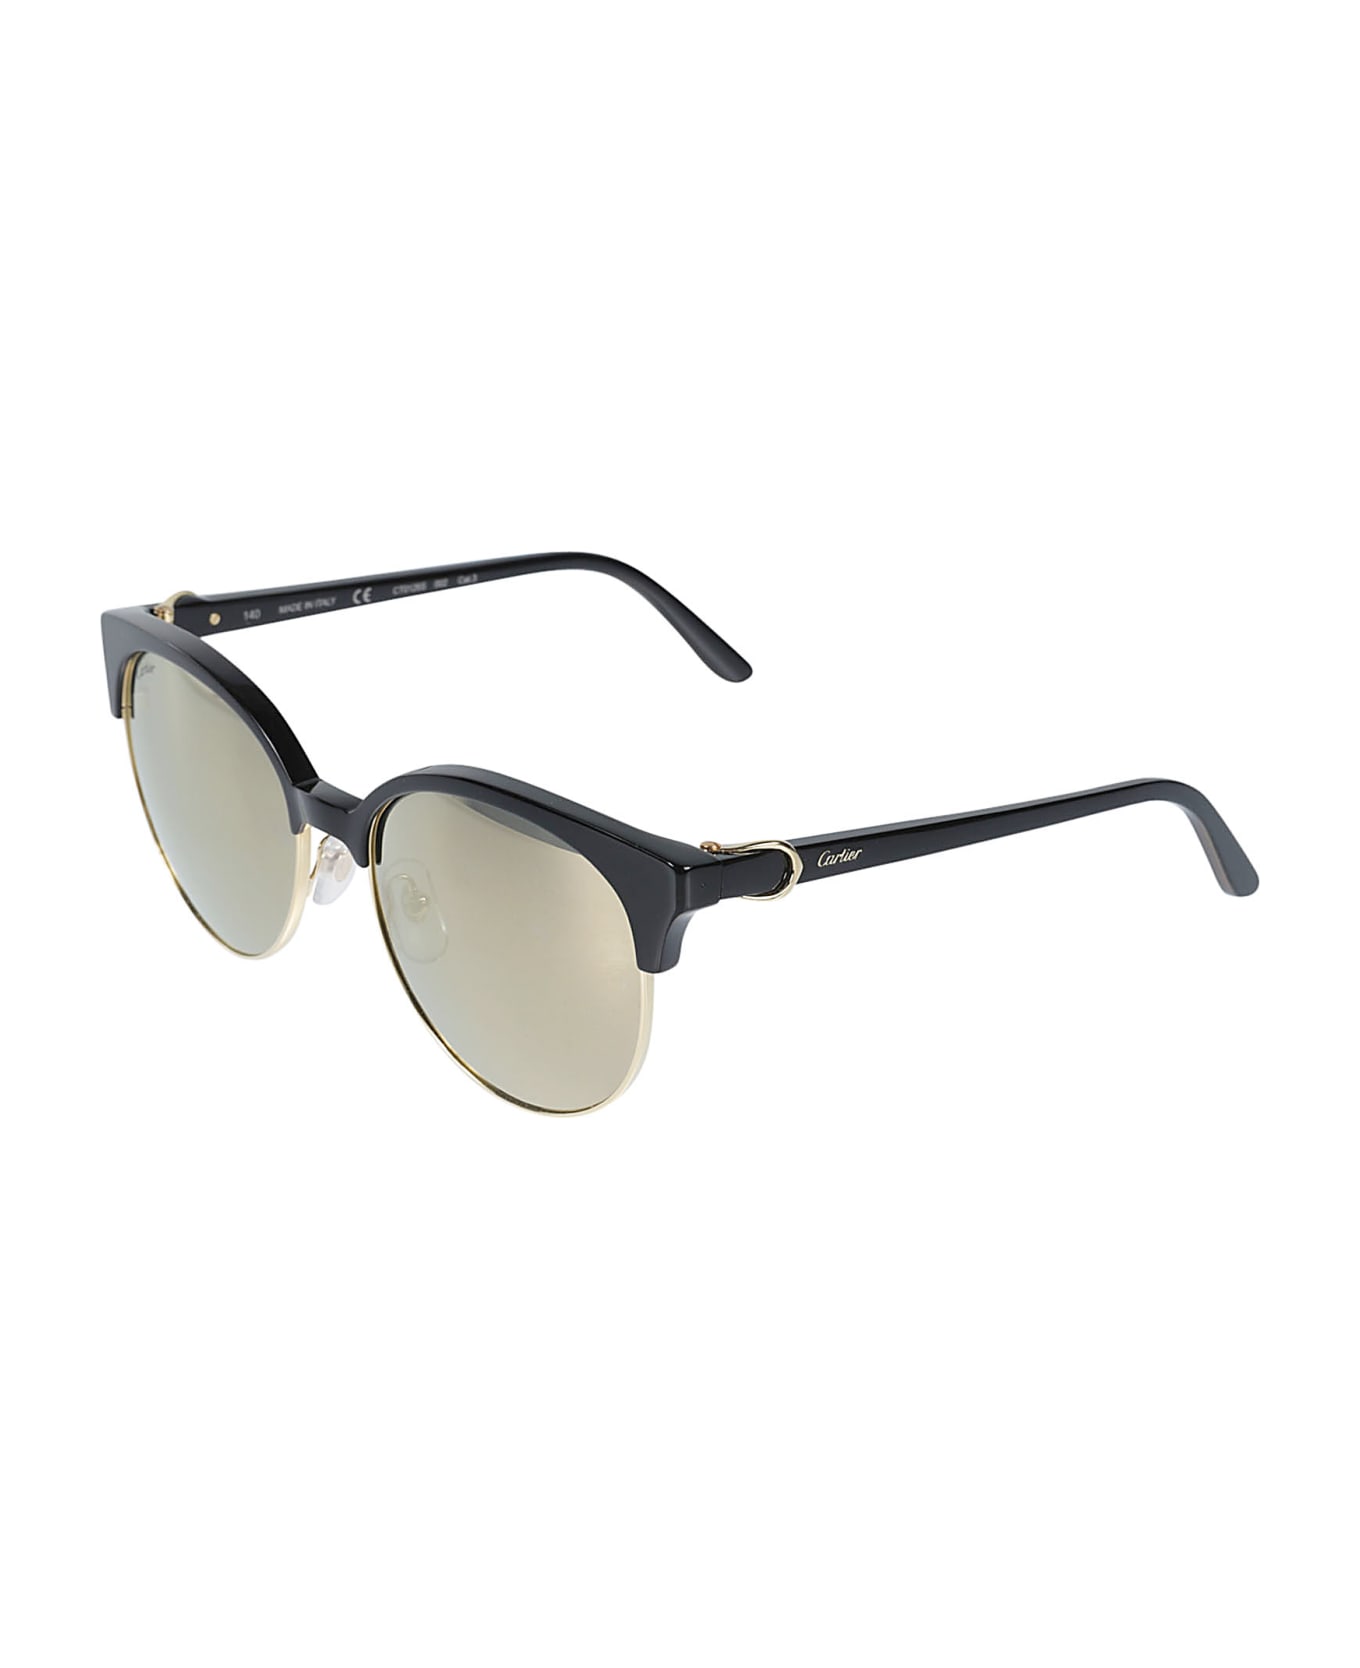 Cartier Eyewear Clubmaster Style Sunglasses - Black